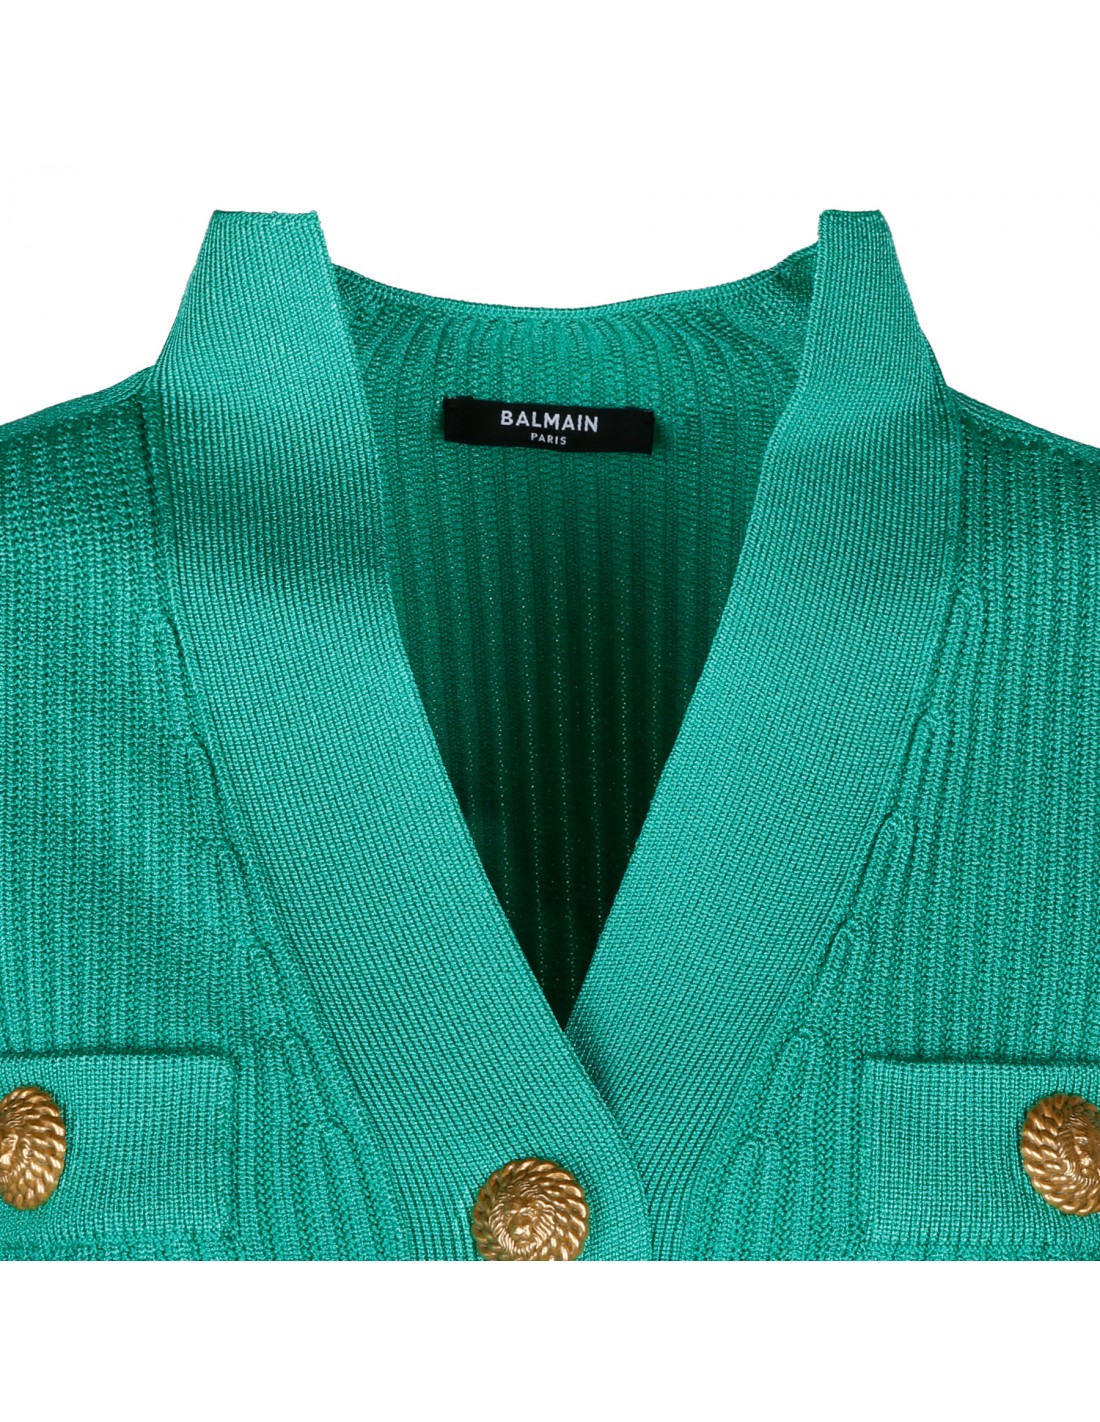 Jade green knitted cardigan